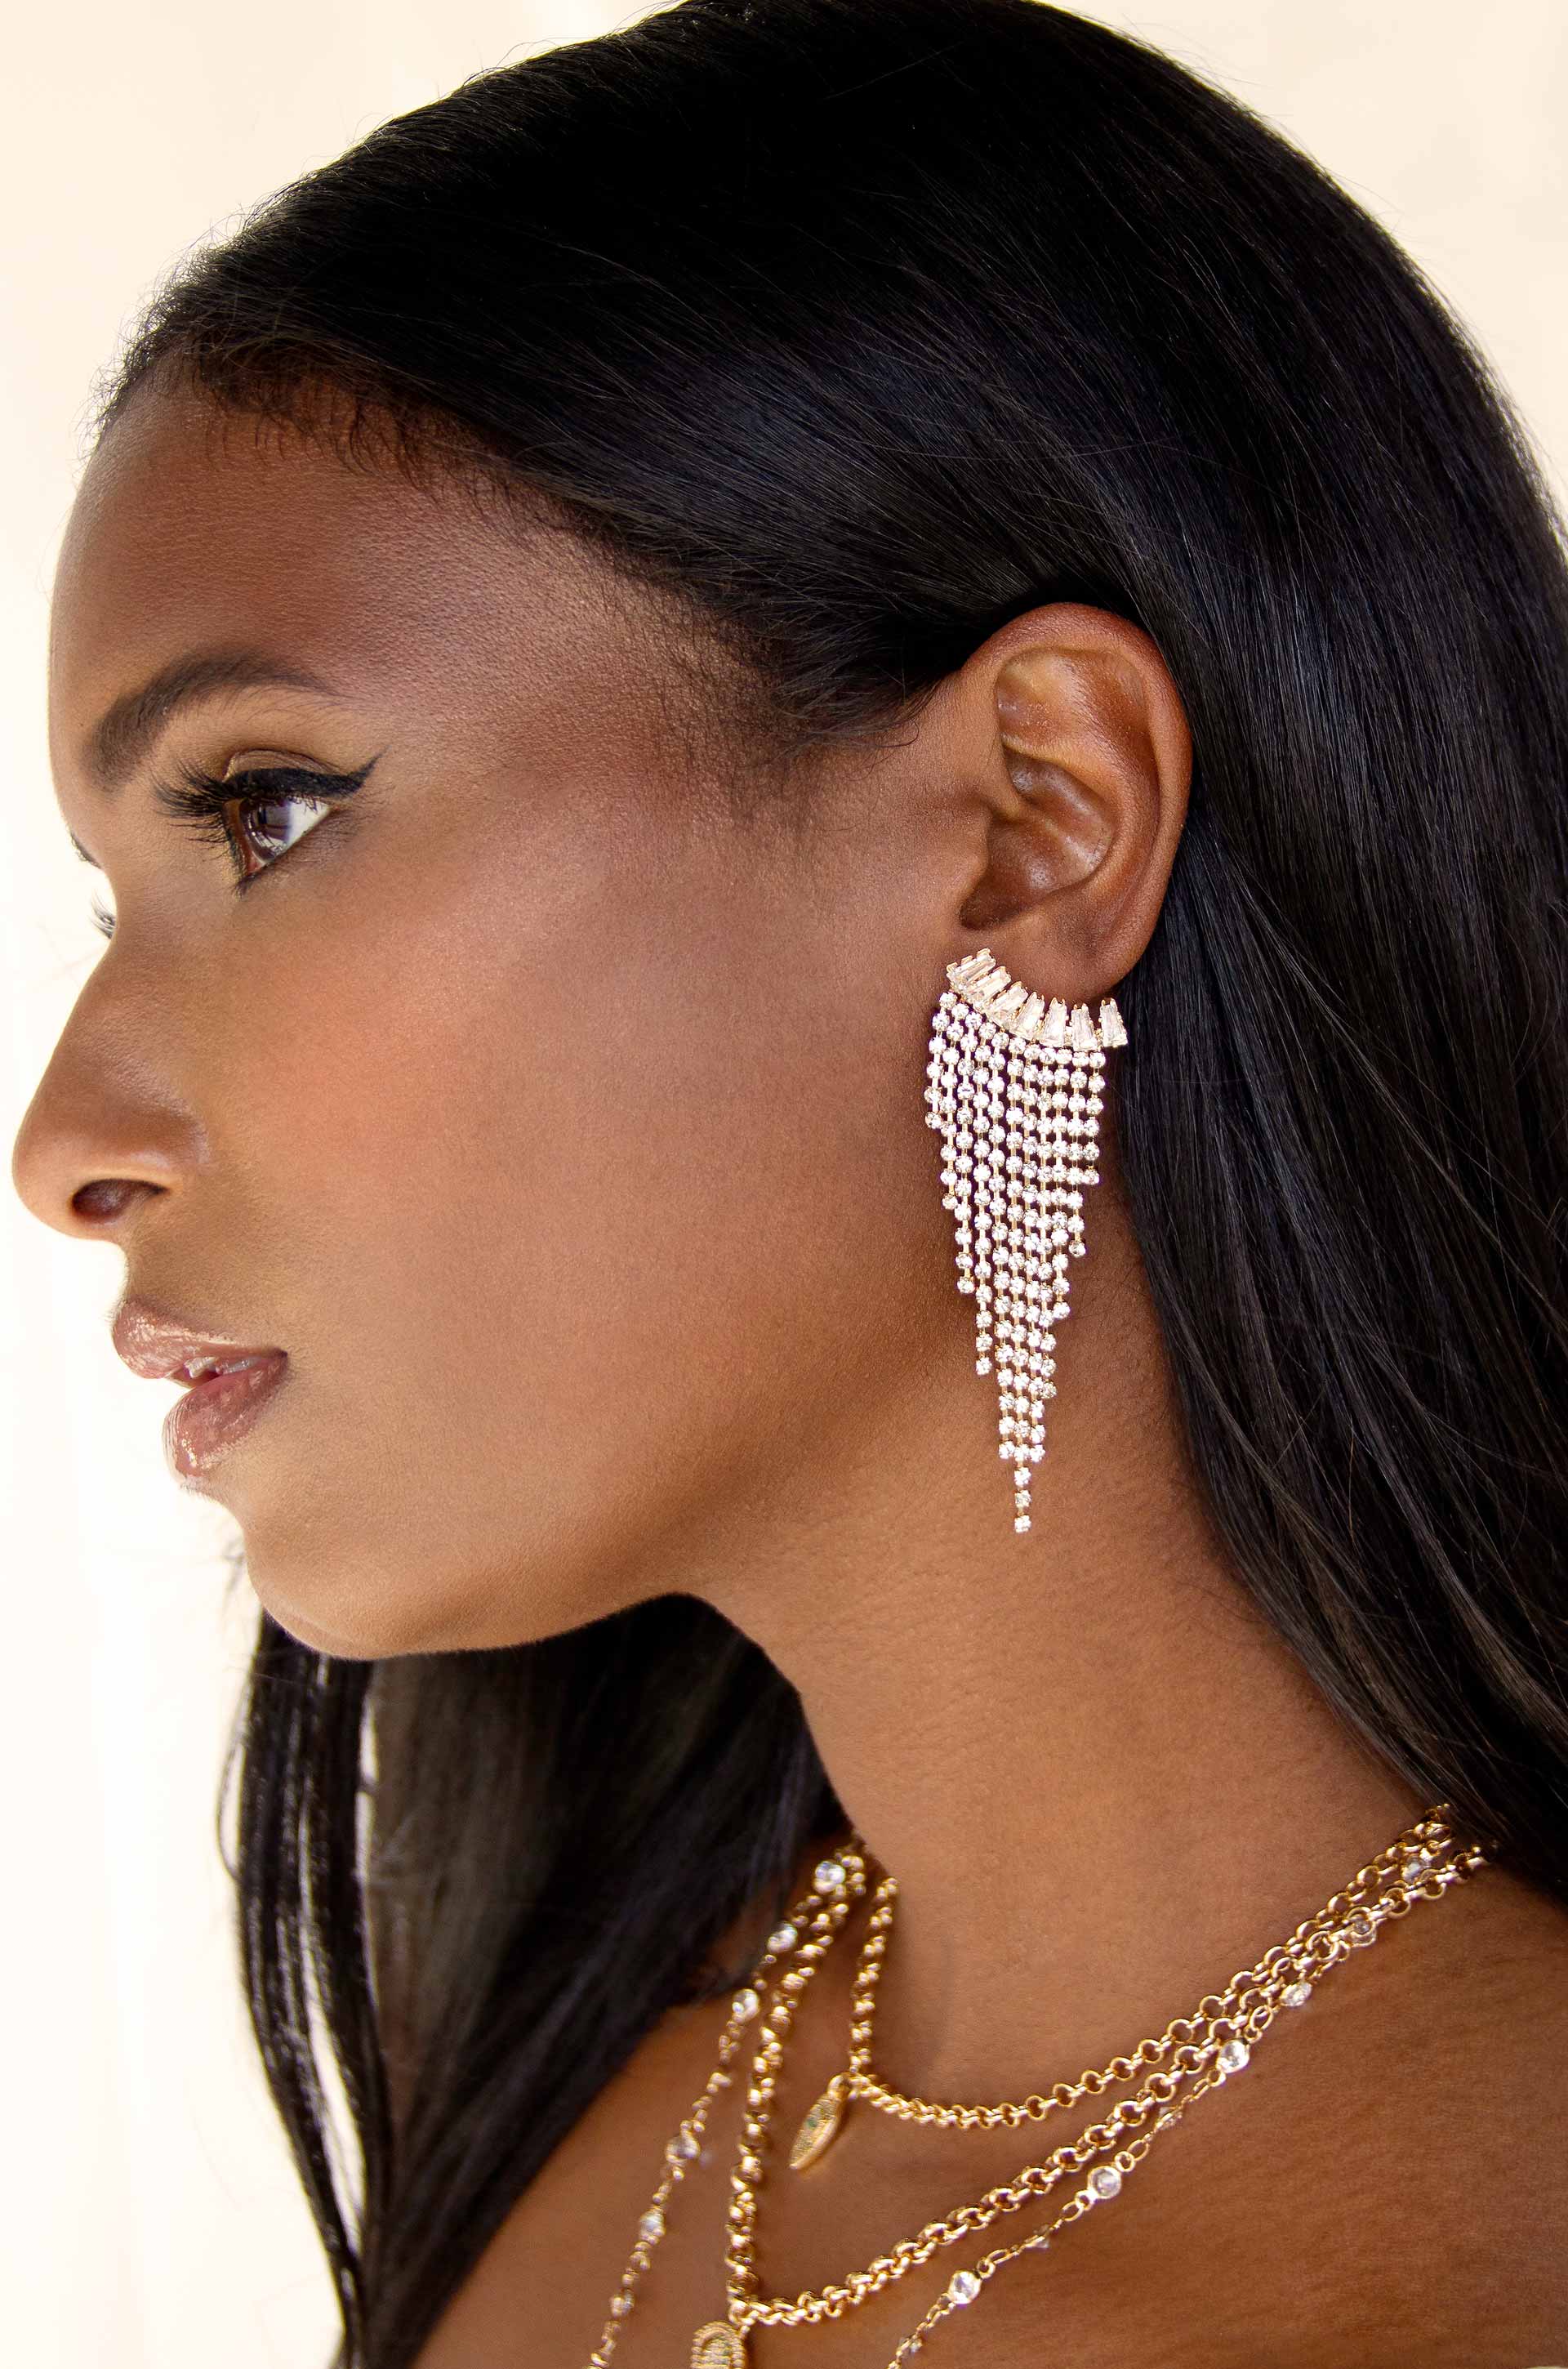 Large Yellow Gold Fringe Earring Backs - Kimberly Collins Gems